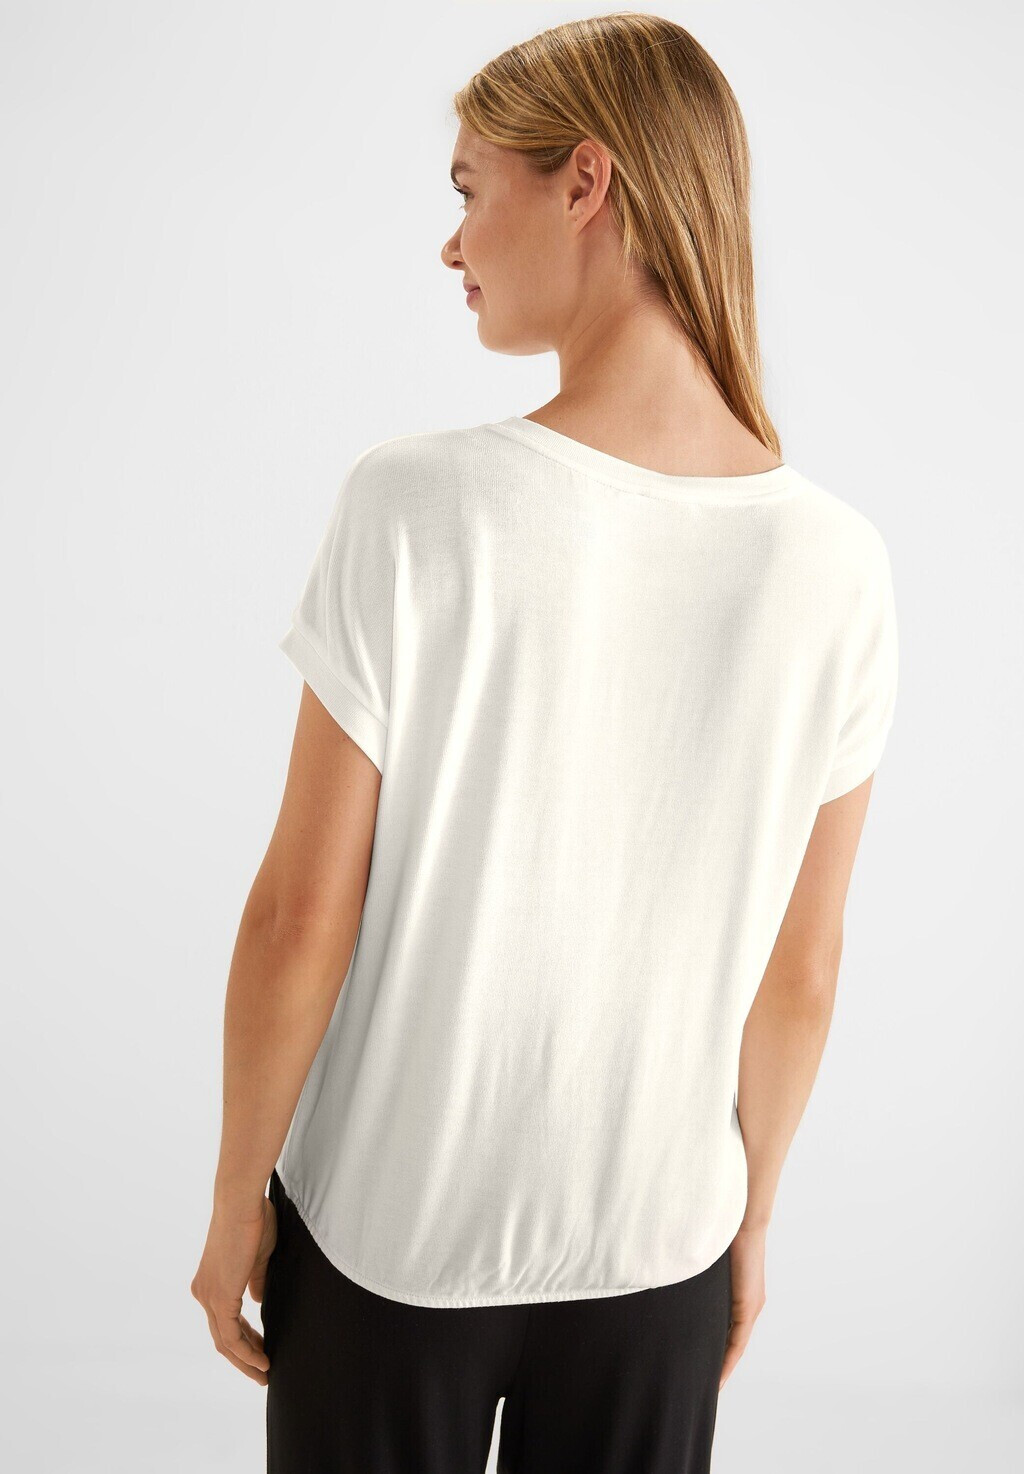 Street One T-Shirt (A319650) white 22,67 bei € Preisvergleich off ab 